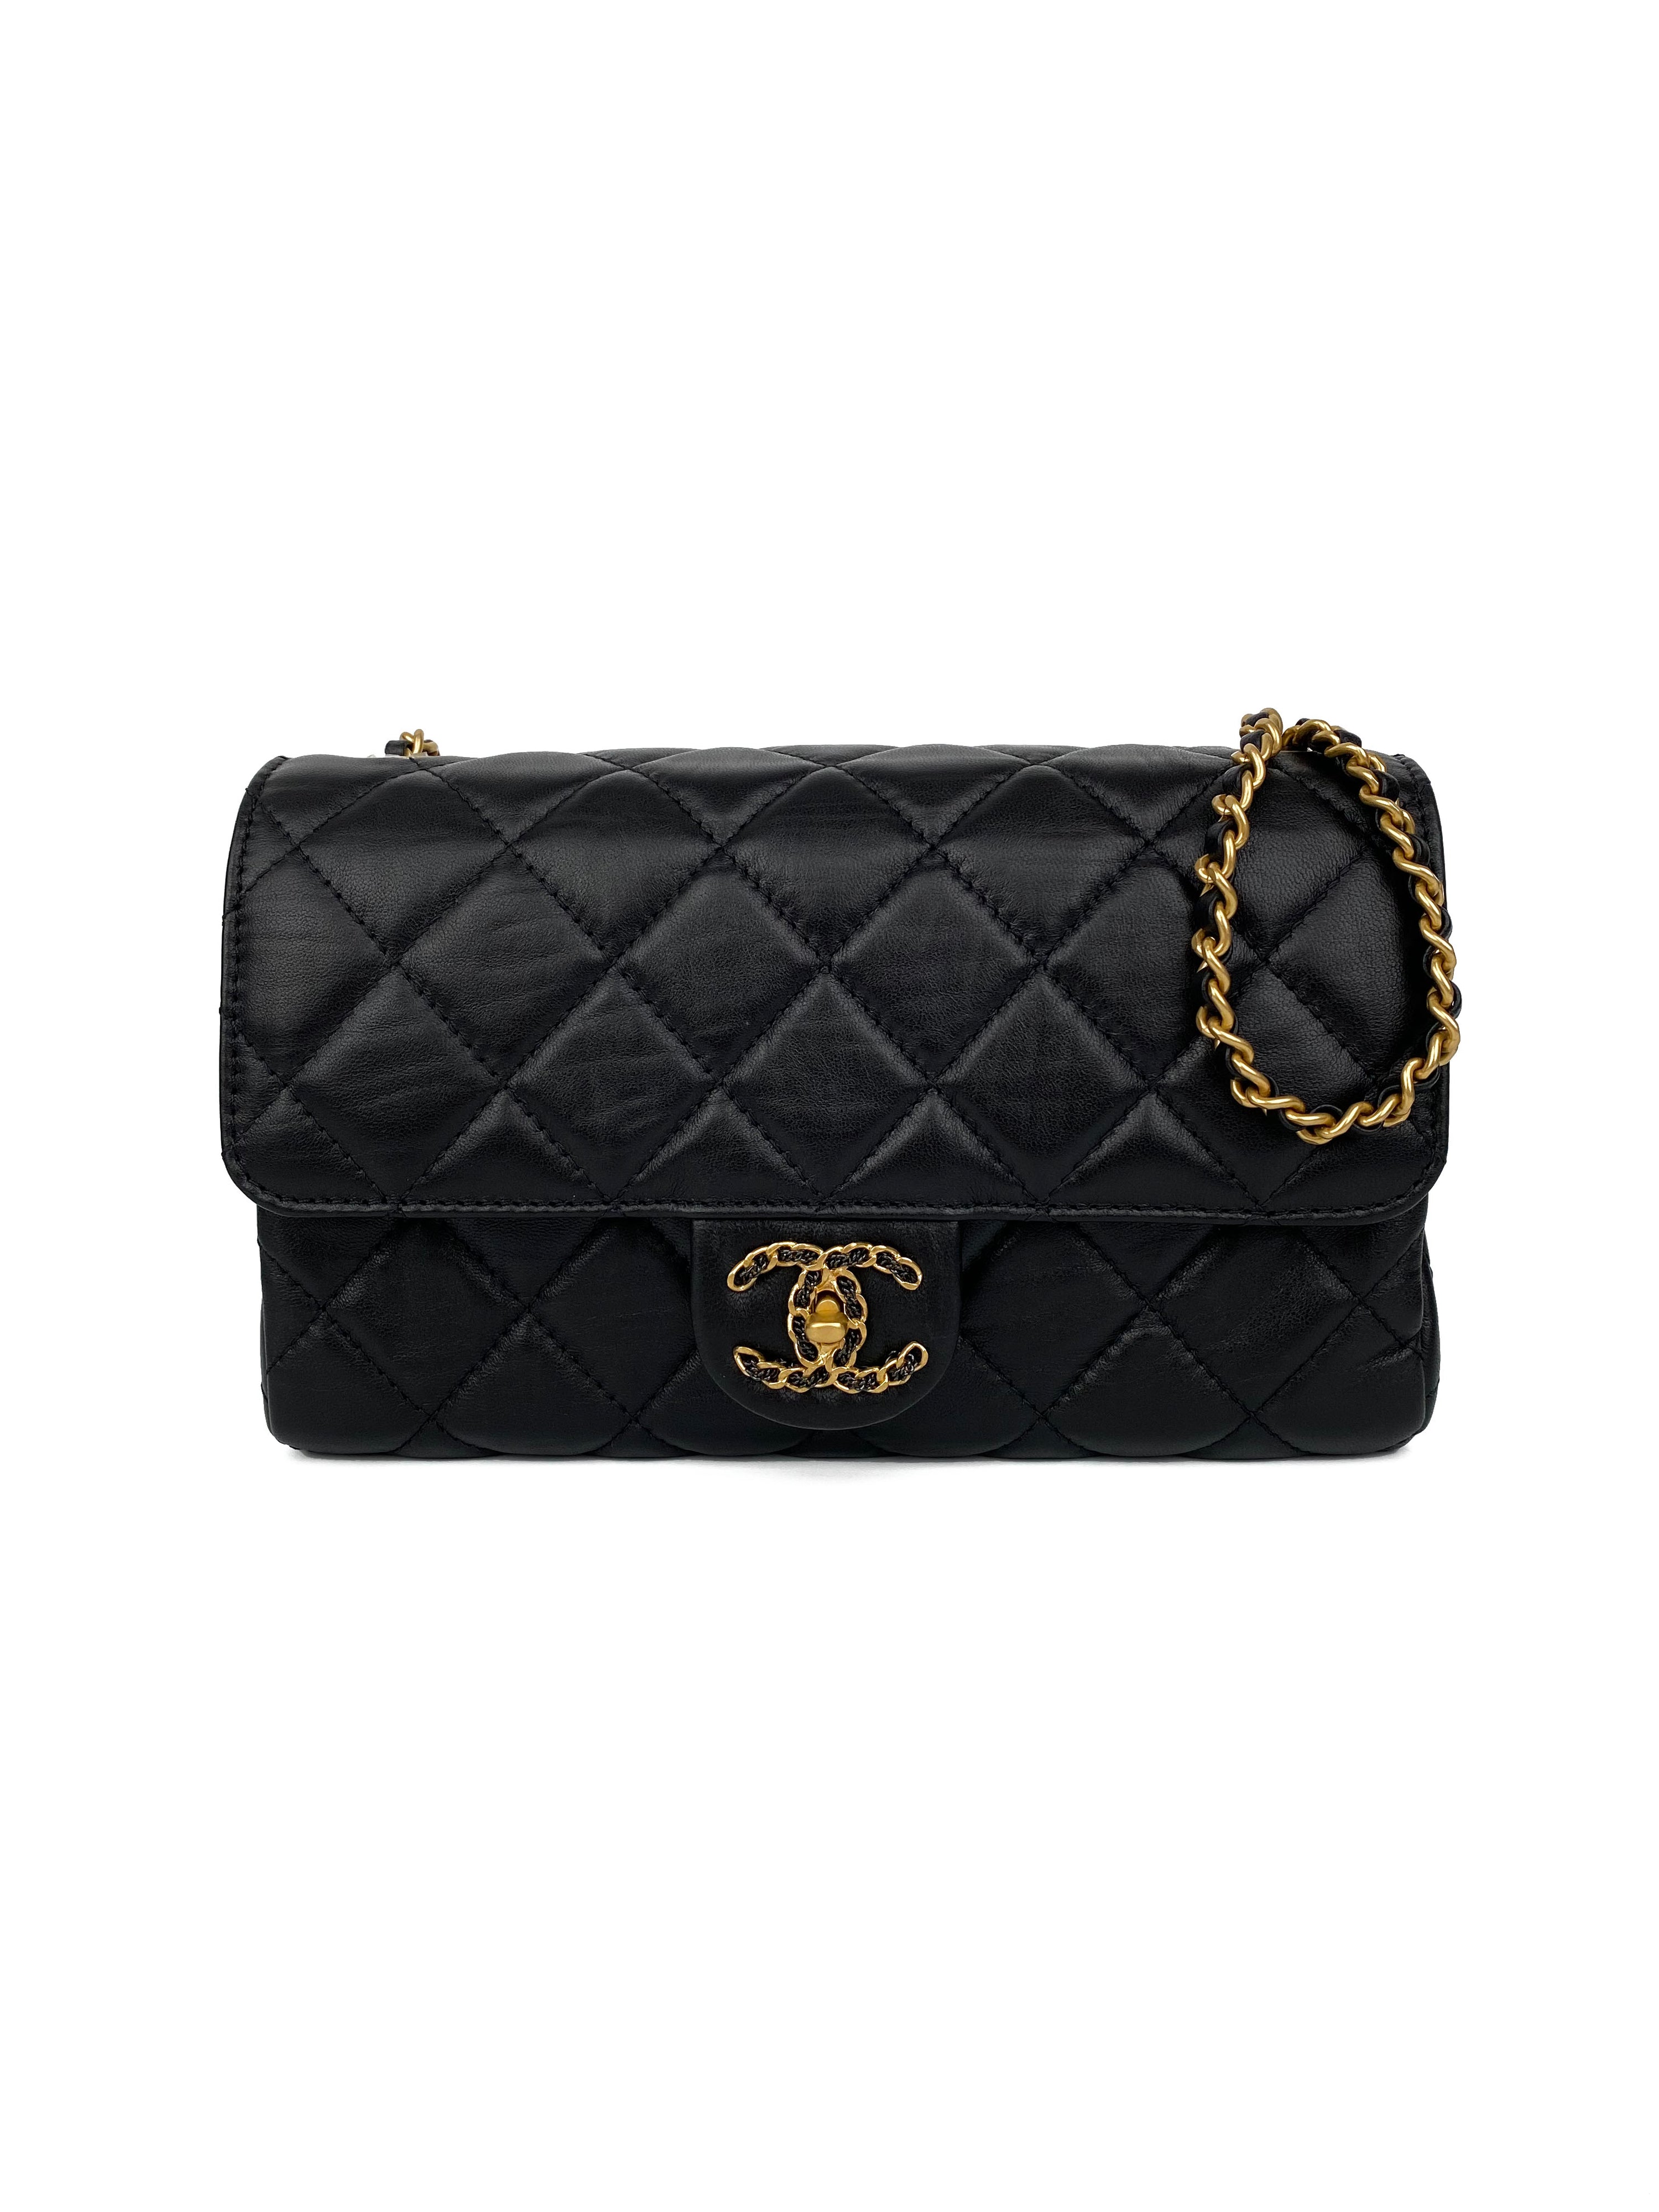 Chanel Mini Black 19 Bag